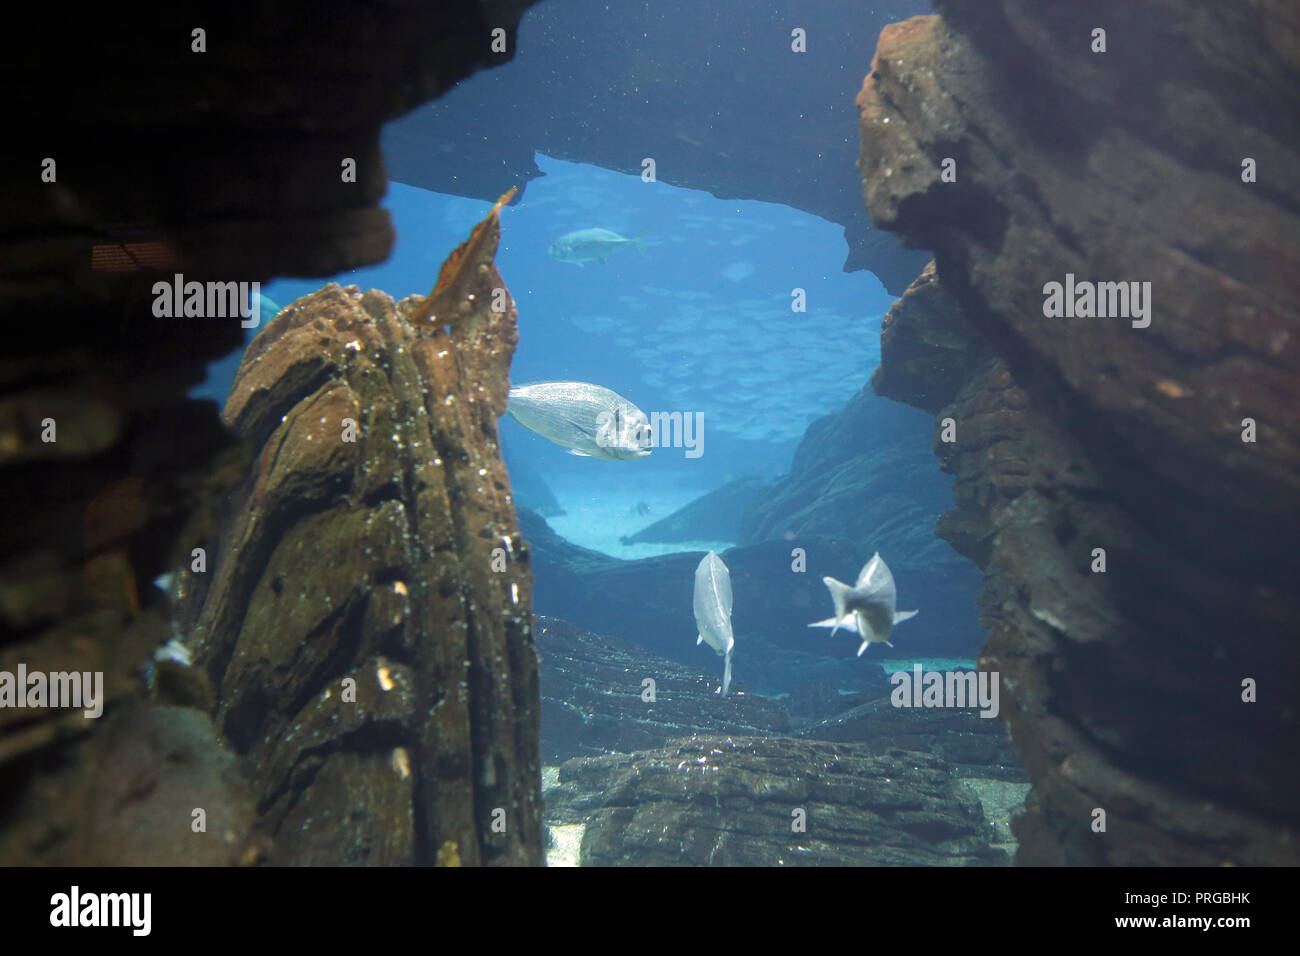 Aquarium Dorade Brassen wideview Stockfoto